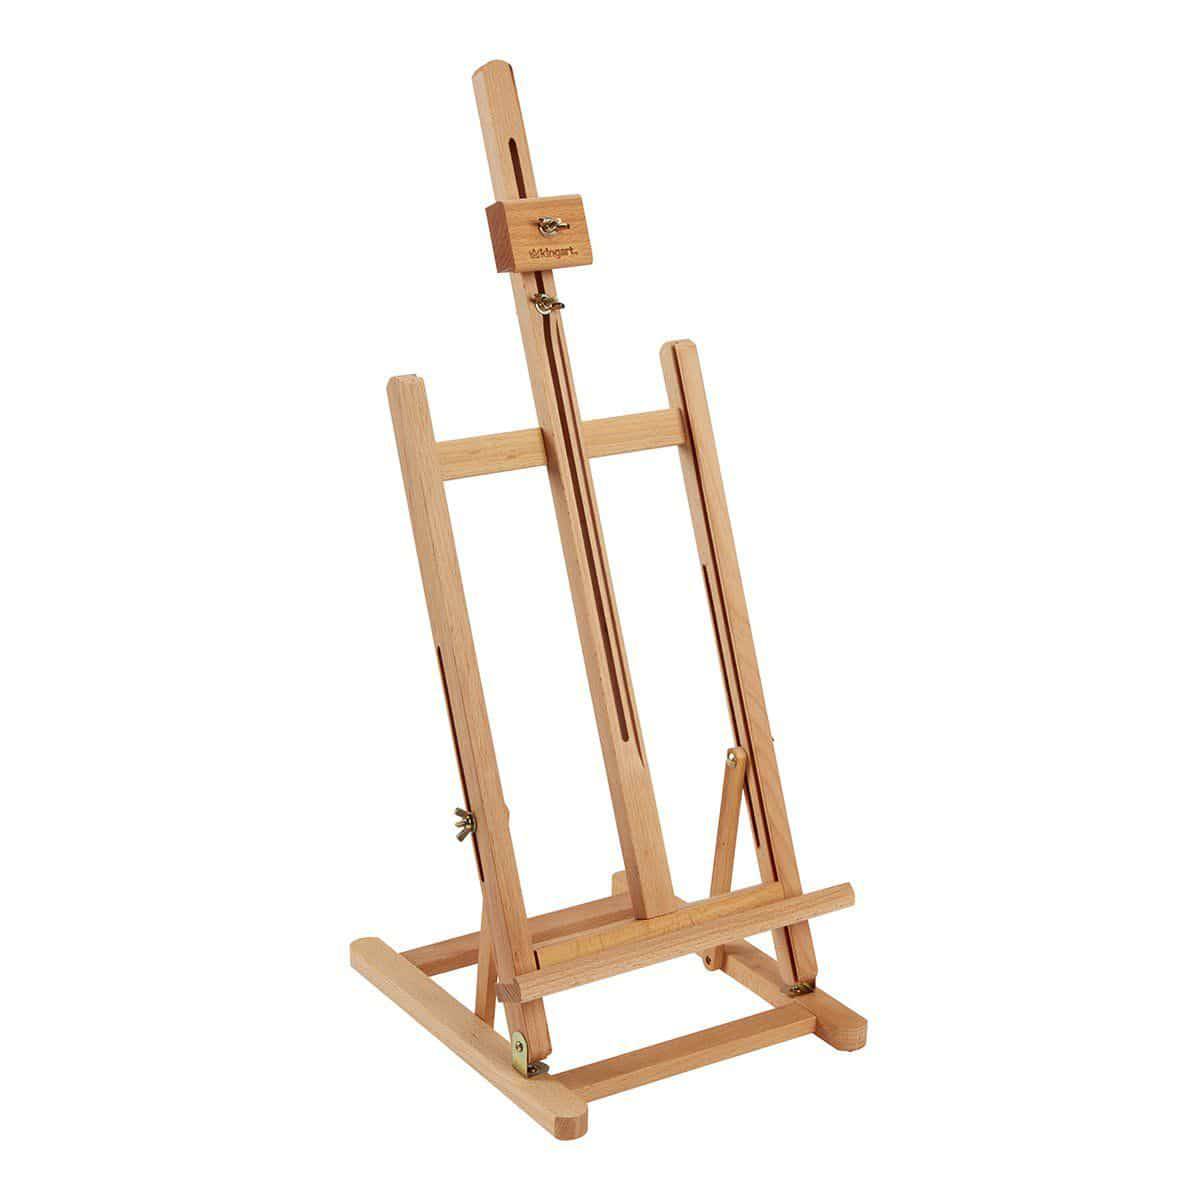 6 Pack of US Art Supply Mini Wood Studio Adjustable Artist H-Frame Table Easel